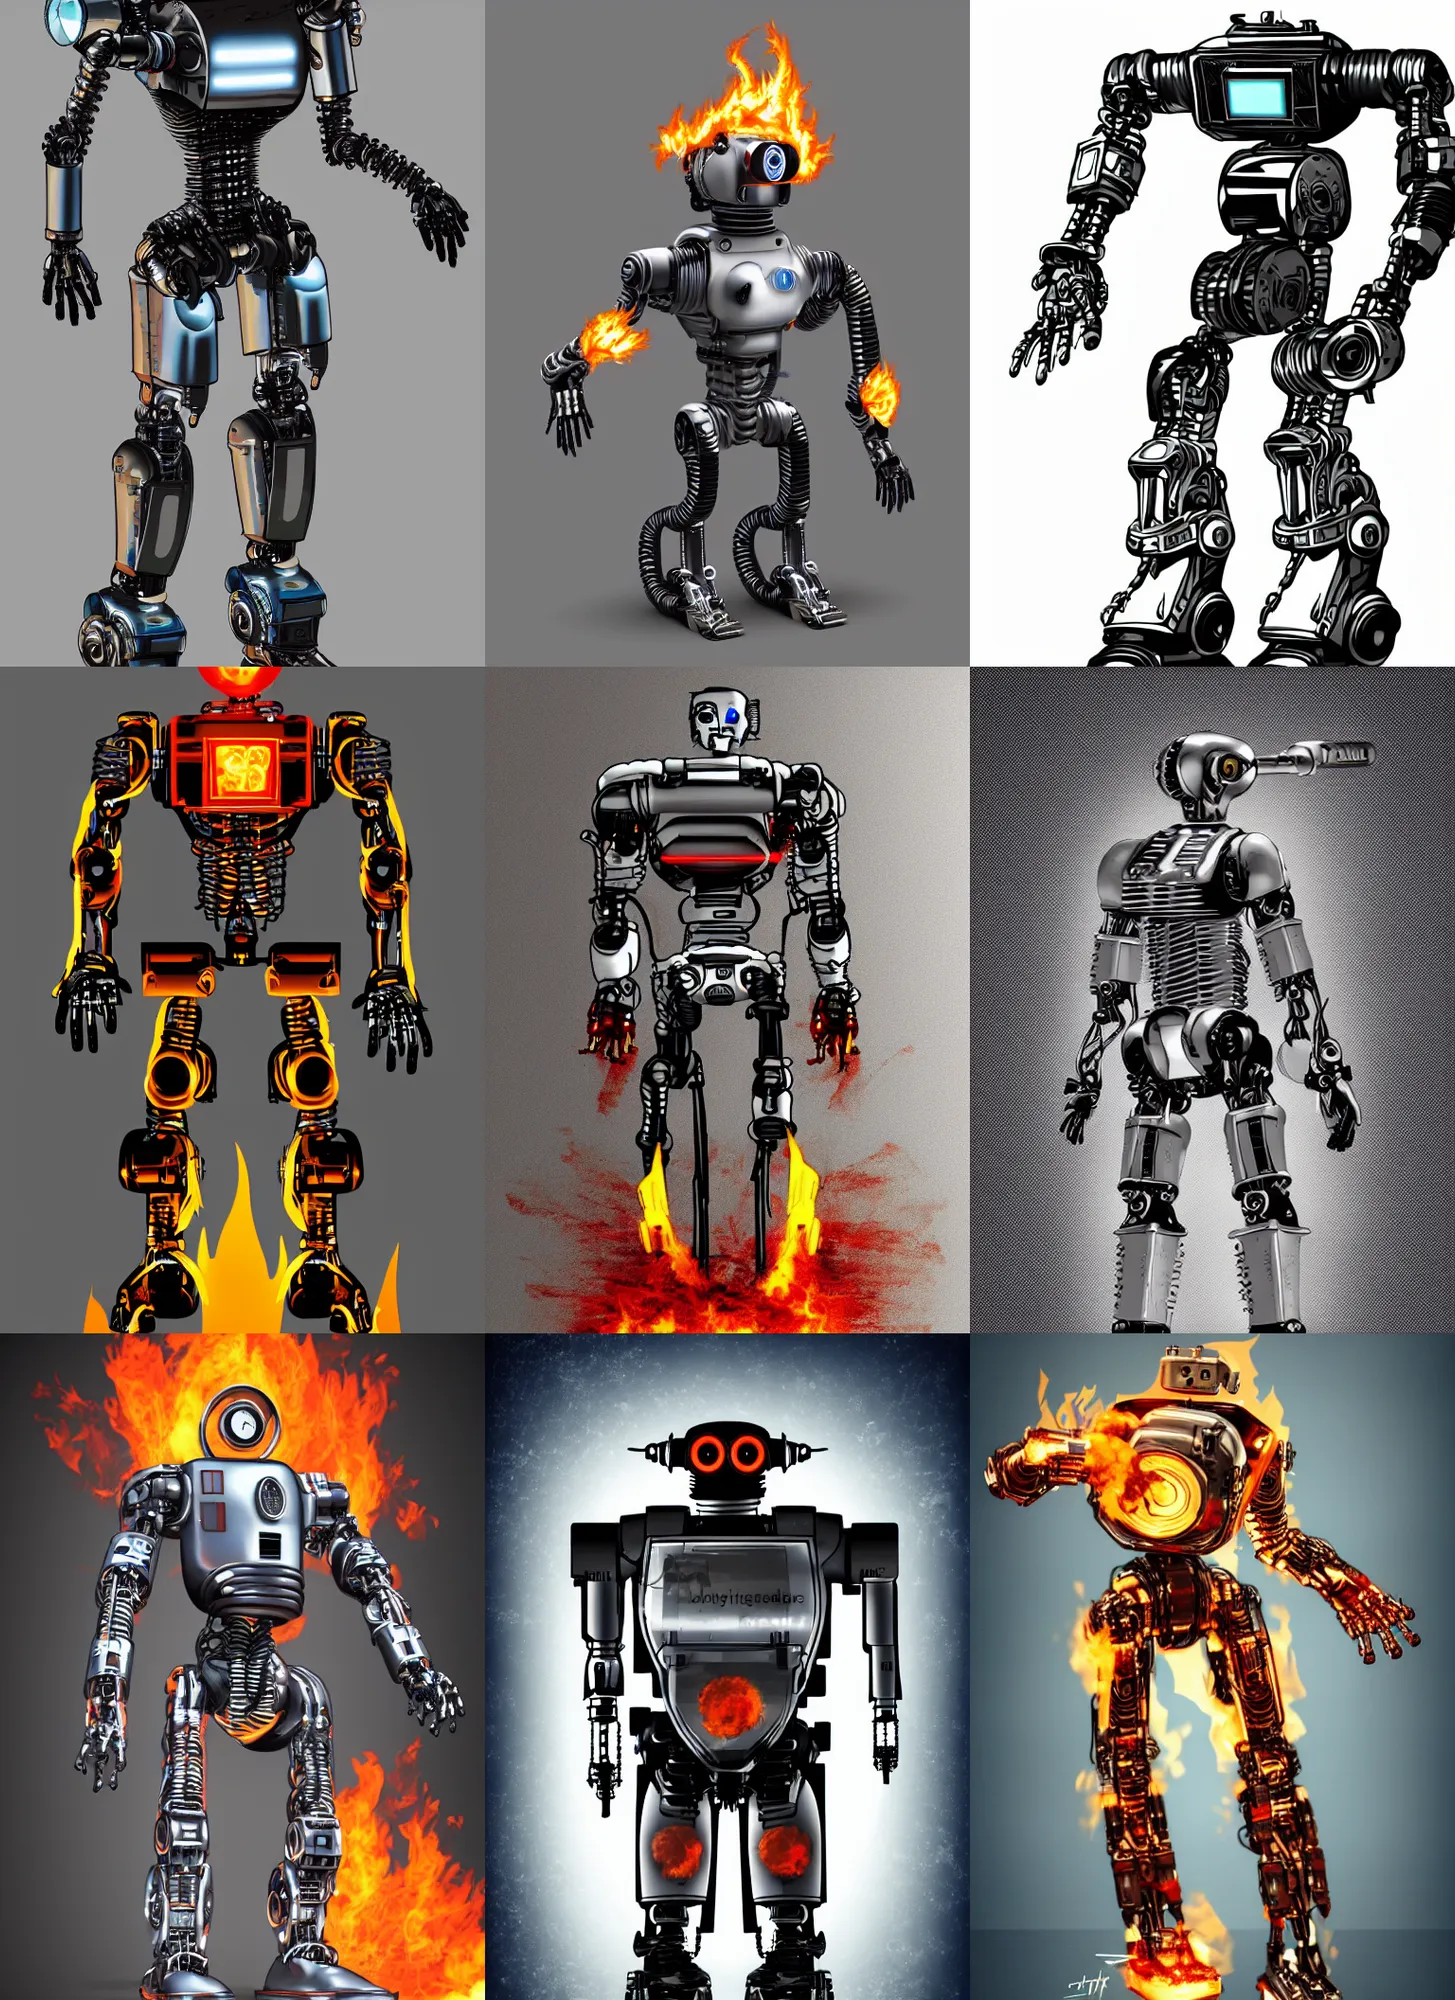 Prompt: full body concept retro sci - fi terminator robot with flames around it